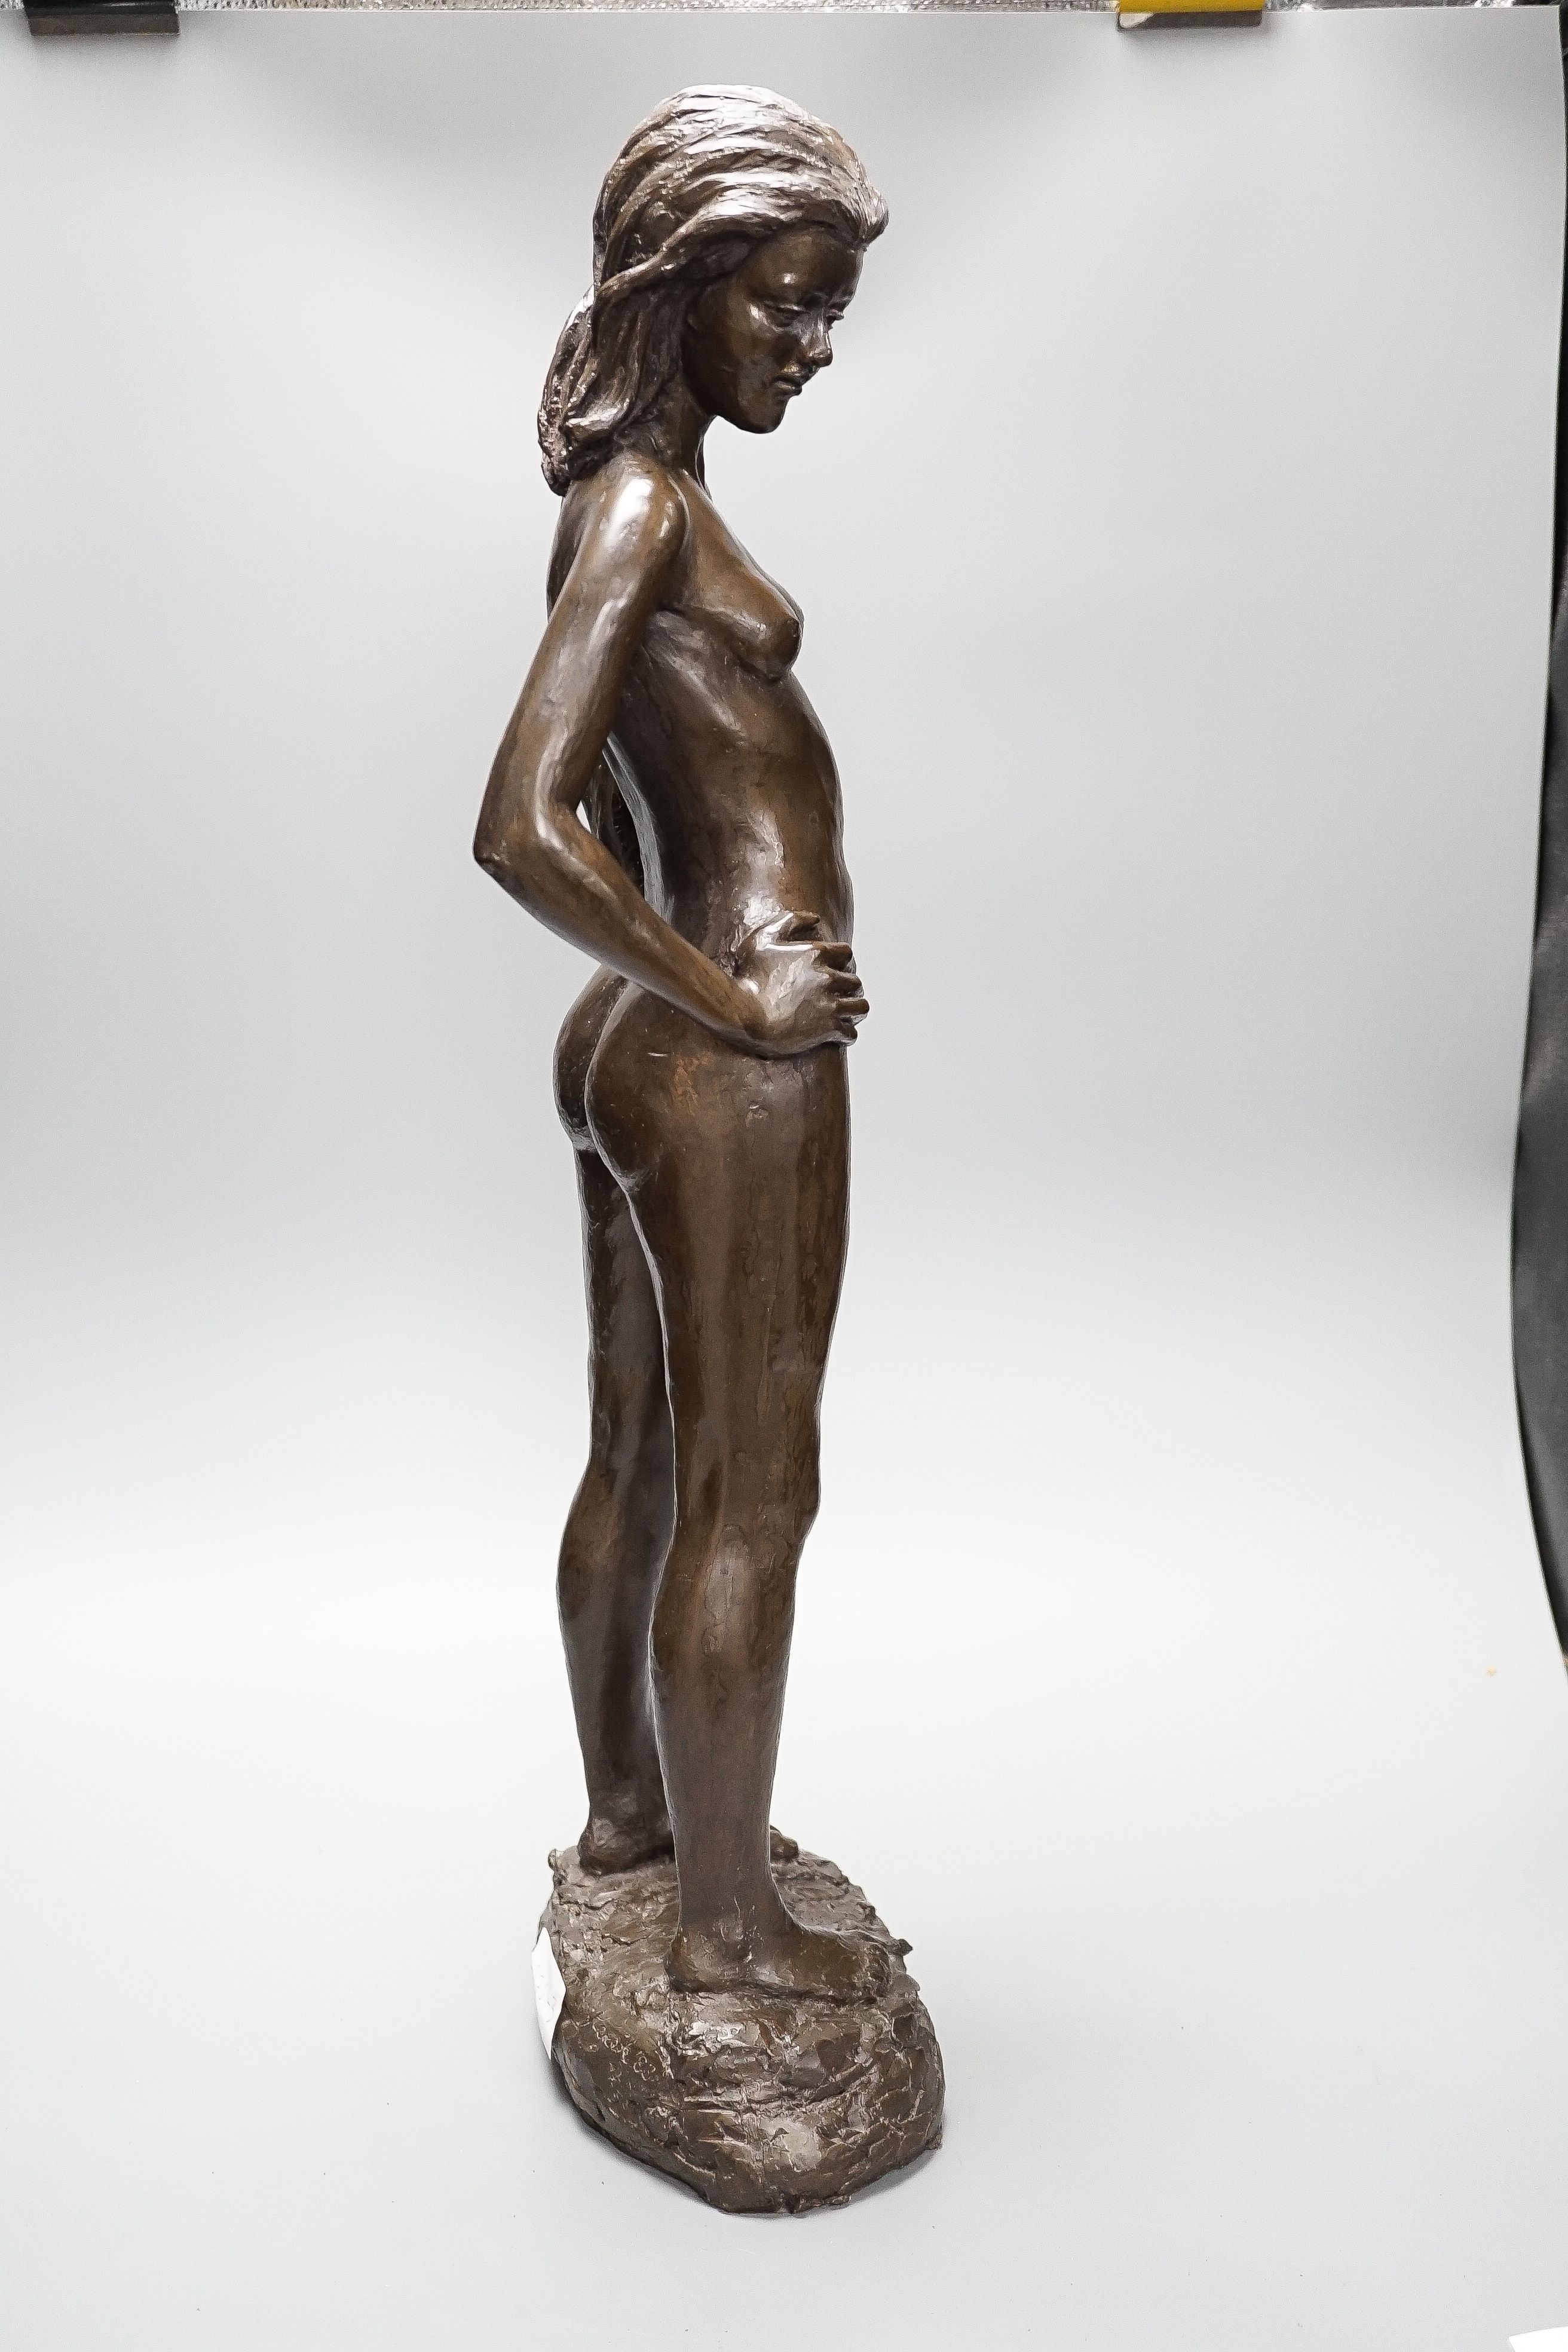 A large bronzed resin figure “Fiona standing” signed Kerek ‘83 64cm